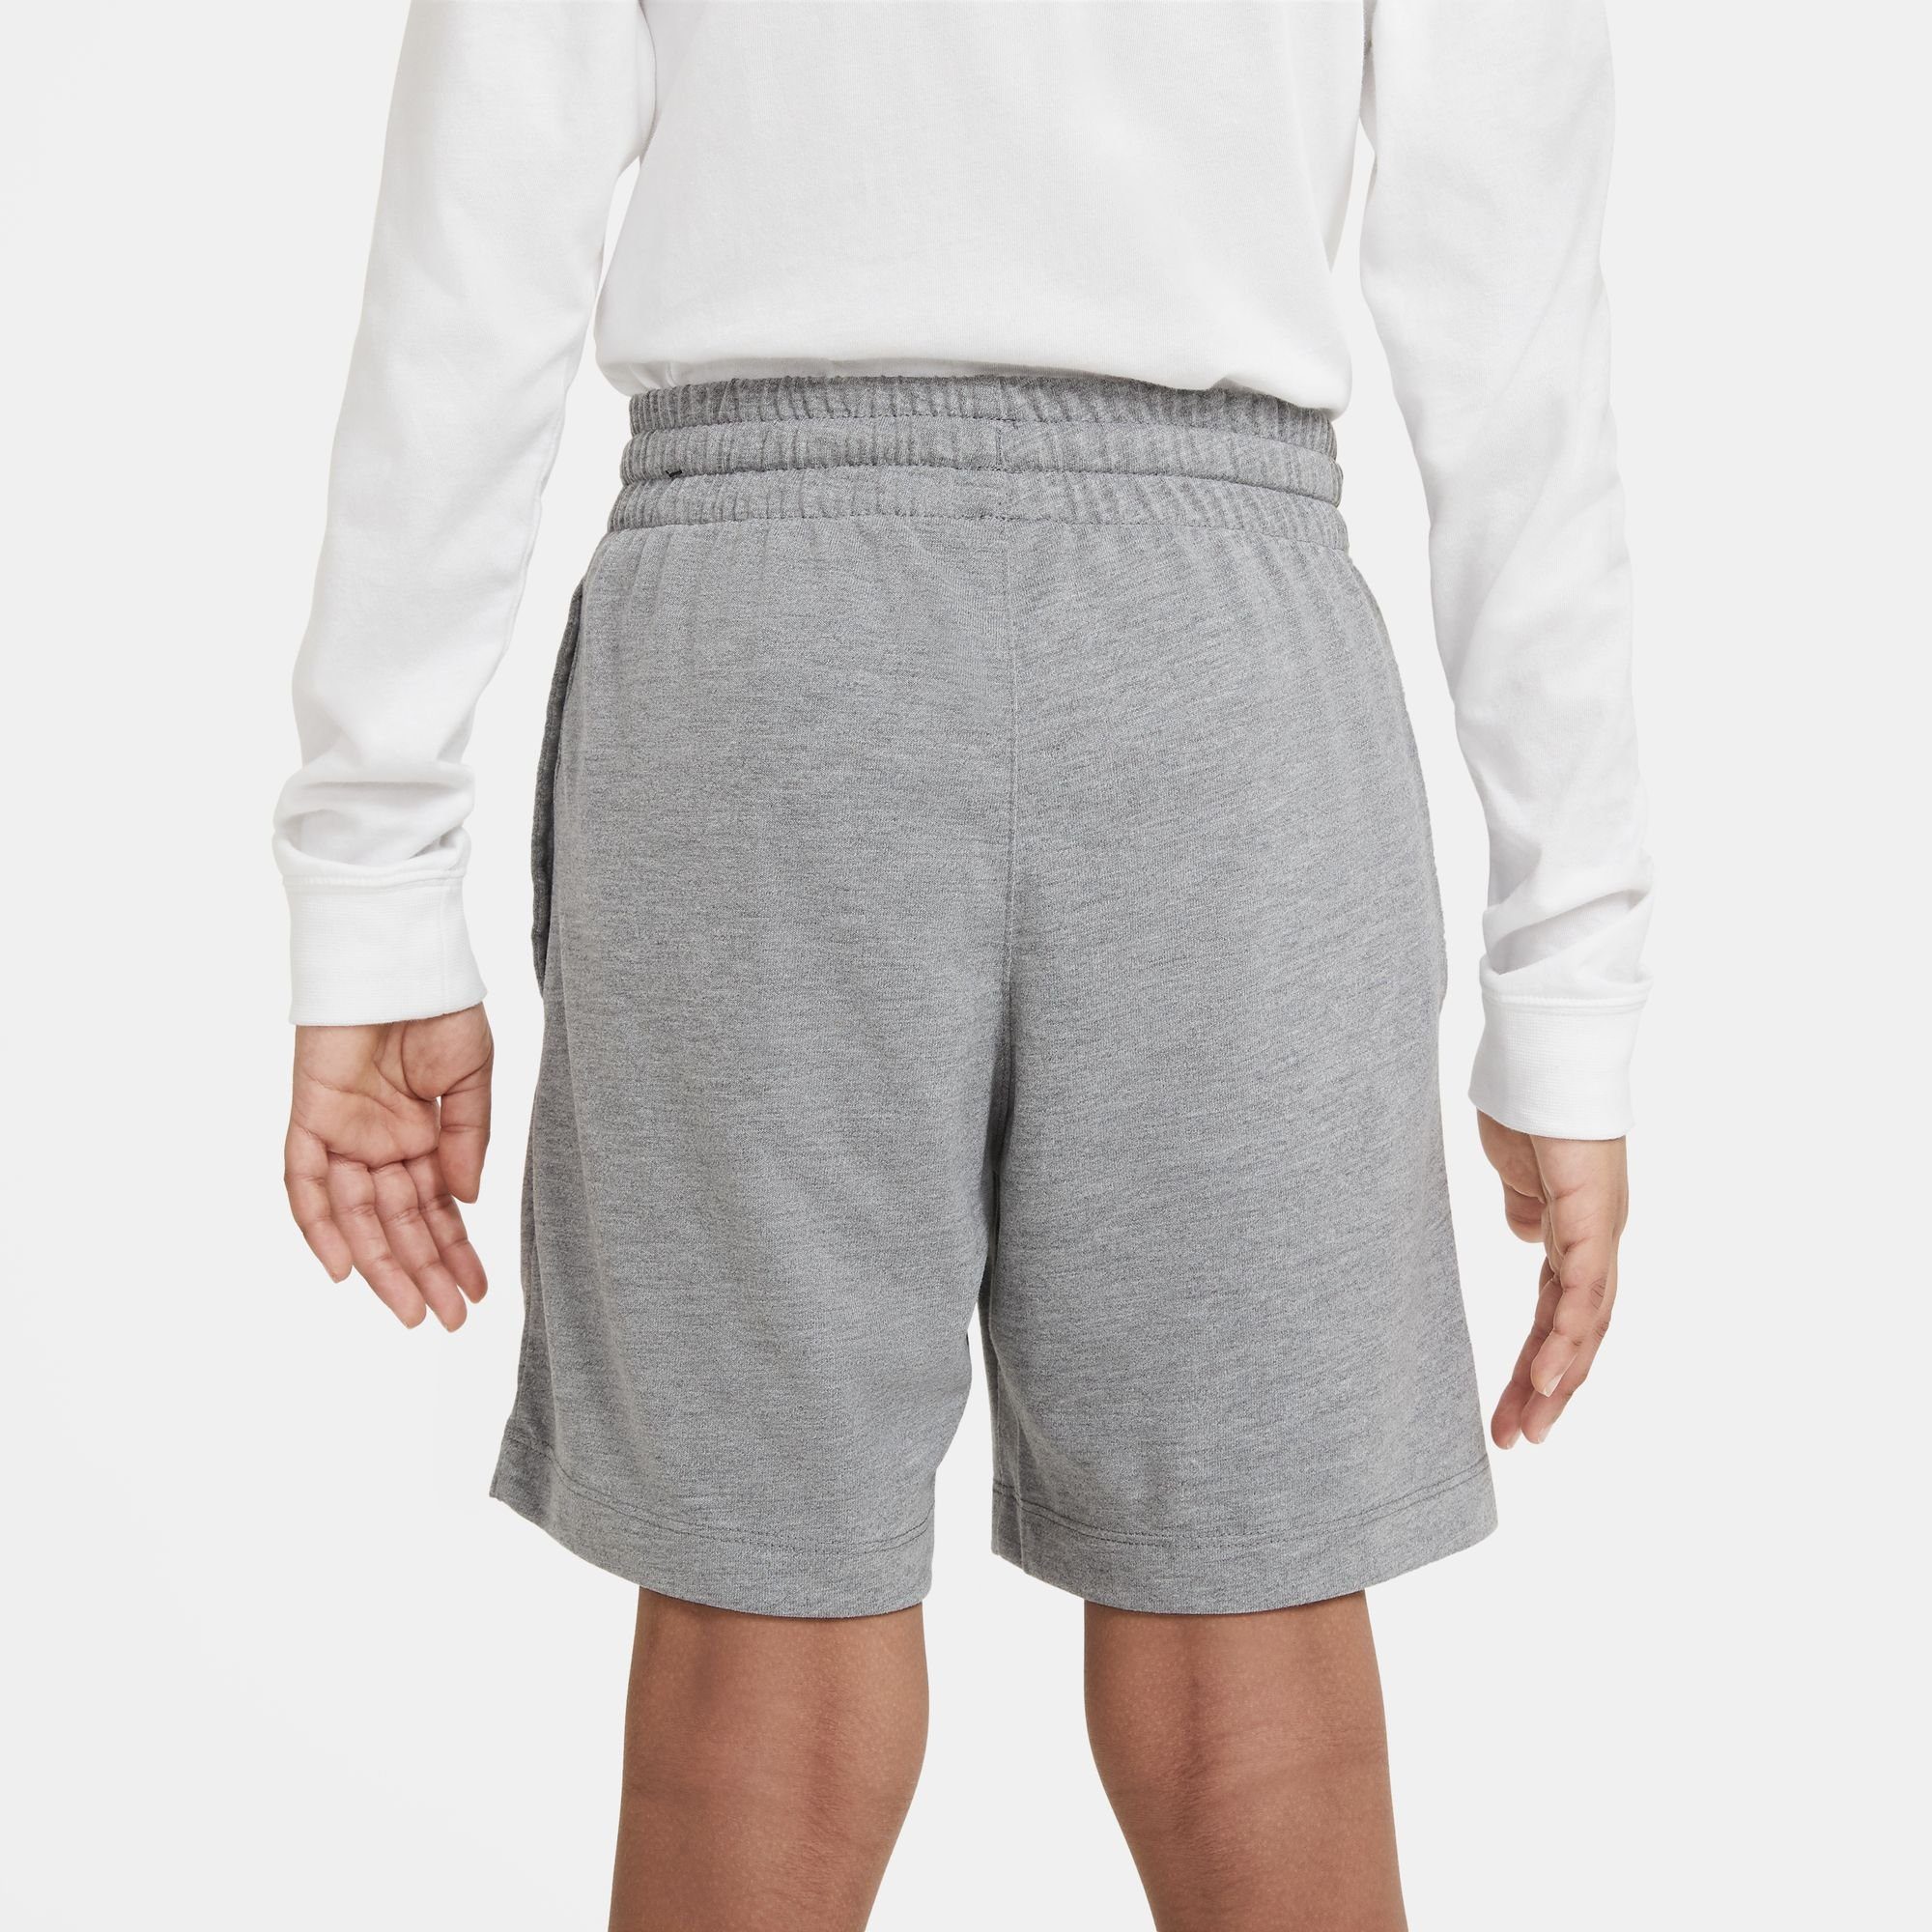 SHORTS JERSEY KIDS' Shorts Nike (BOYS) grau Sportswear BIG